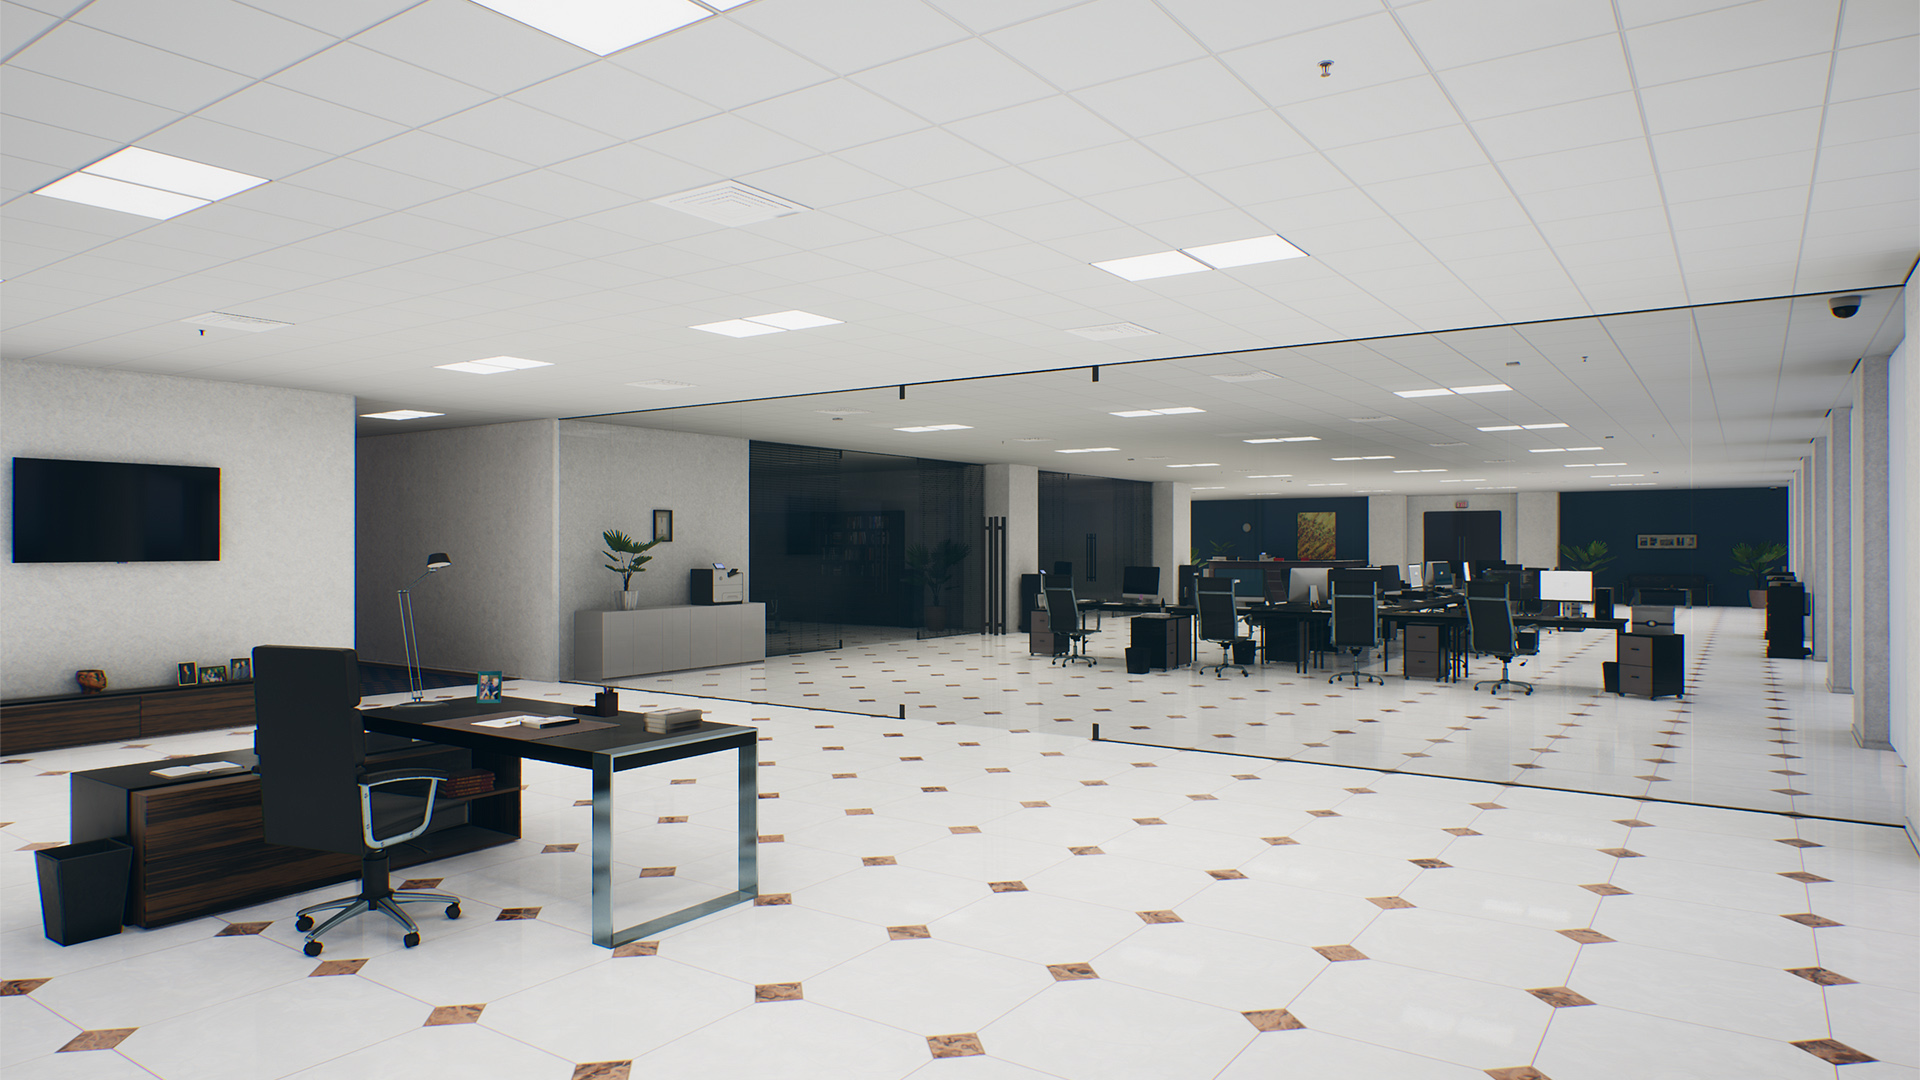 UE4虚幻5 QA Office and Security Room 模块化现代办公室场景 - 图1